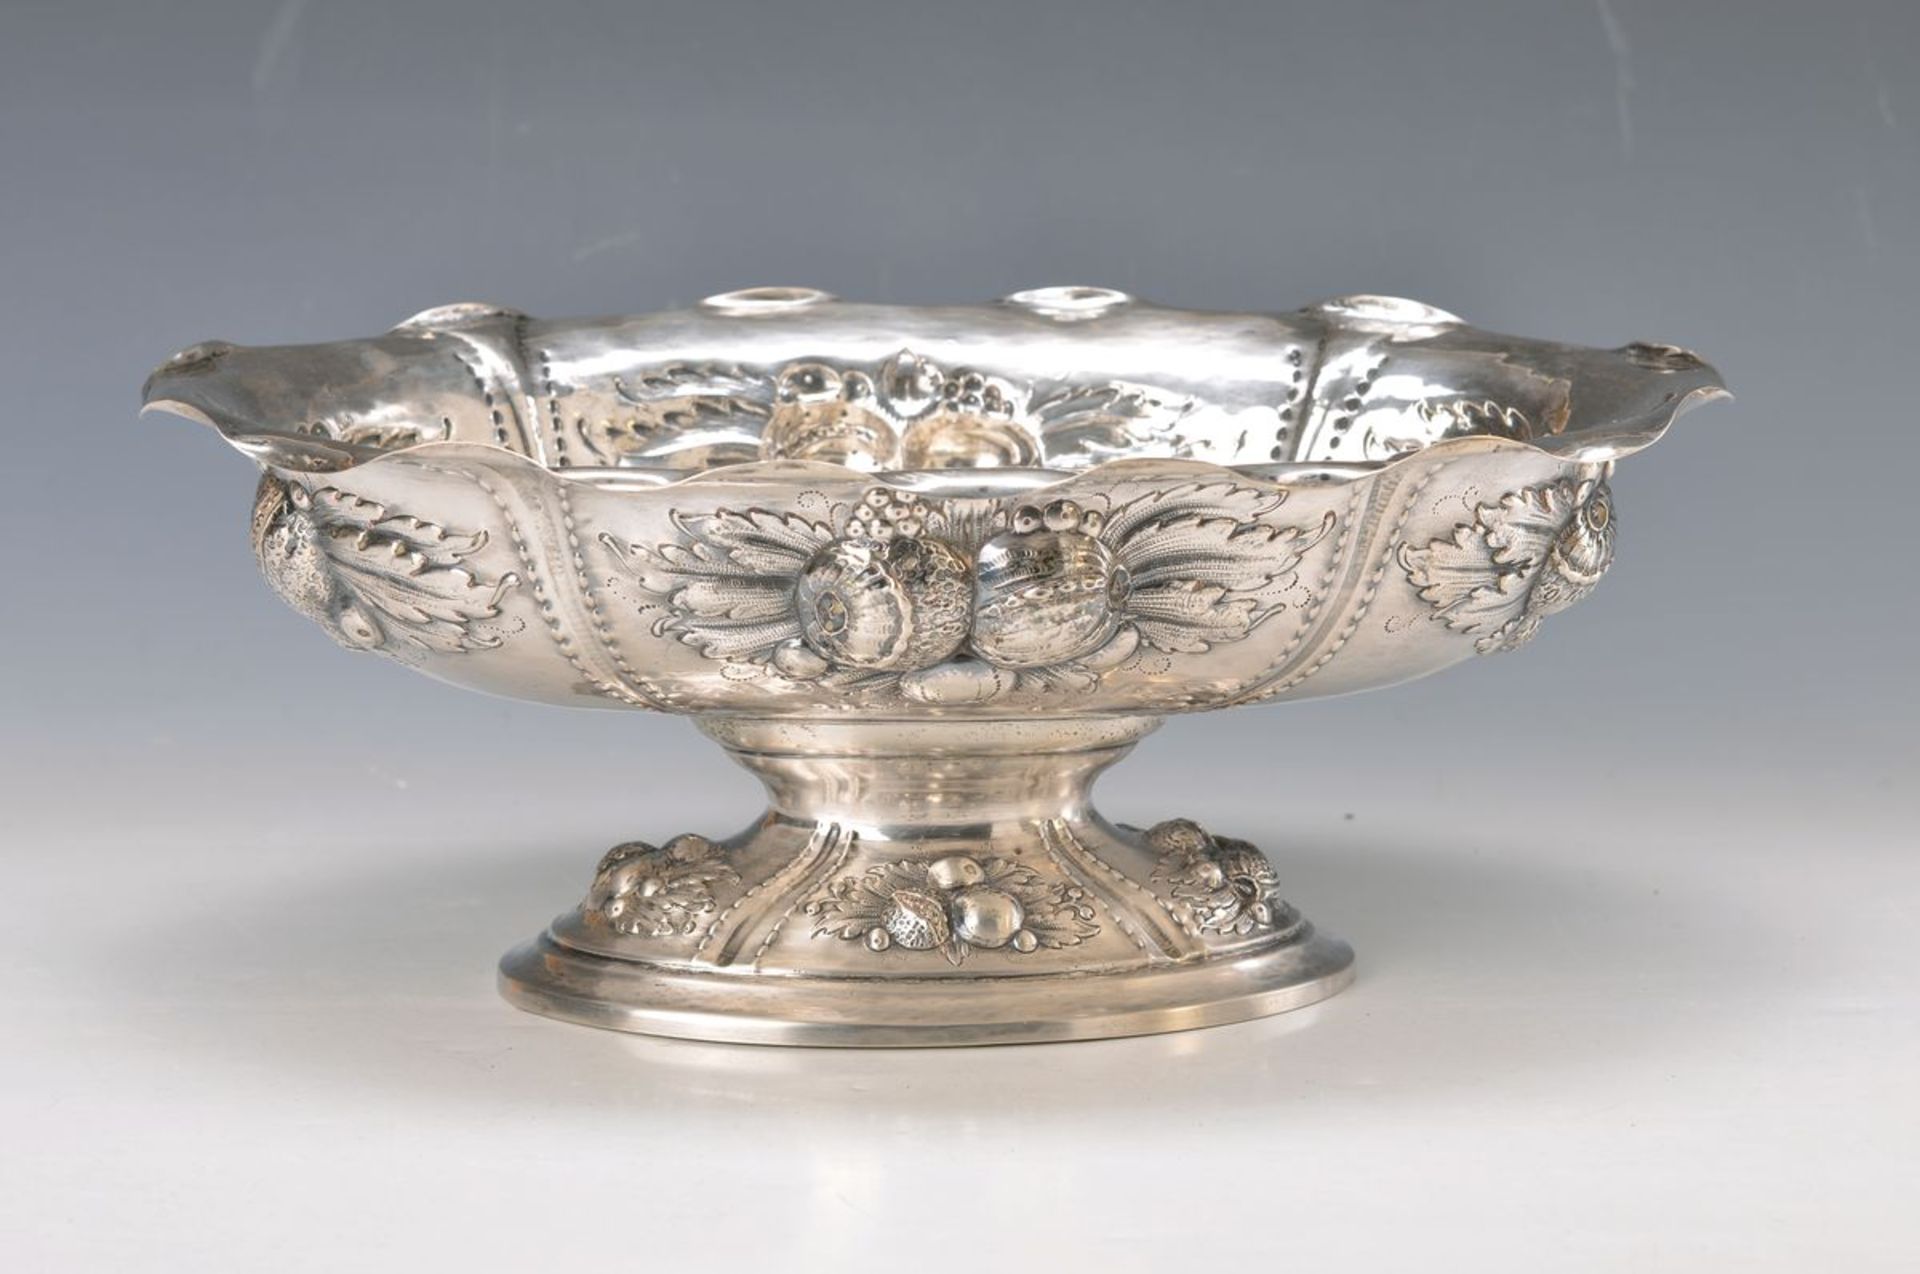 serving bowl, German, signed Friedländer, around 1900, 800 years, driven handcraft, opulent embossed